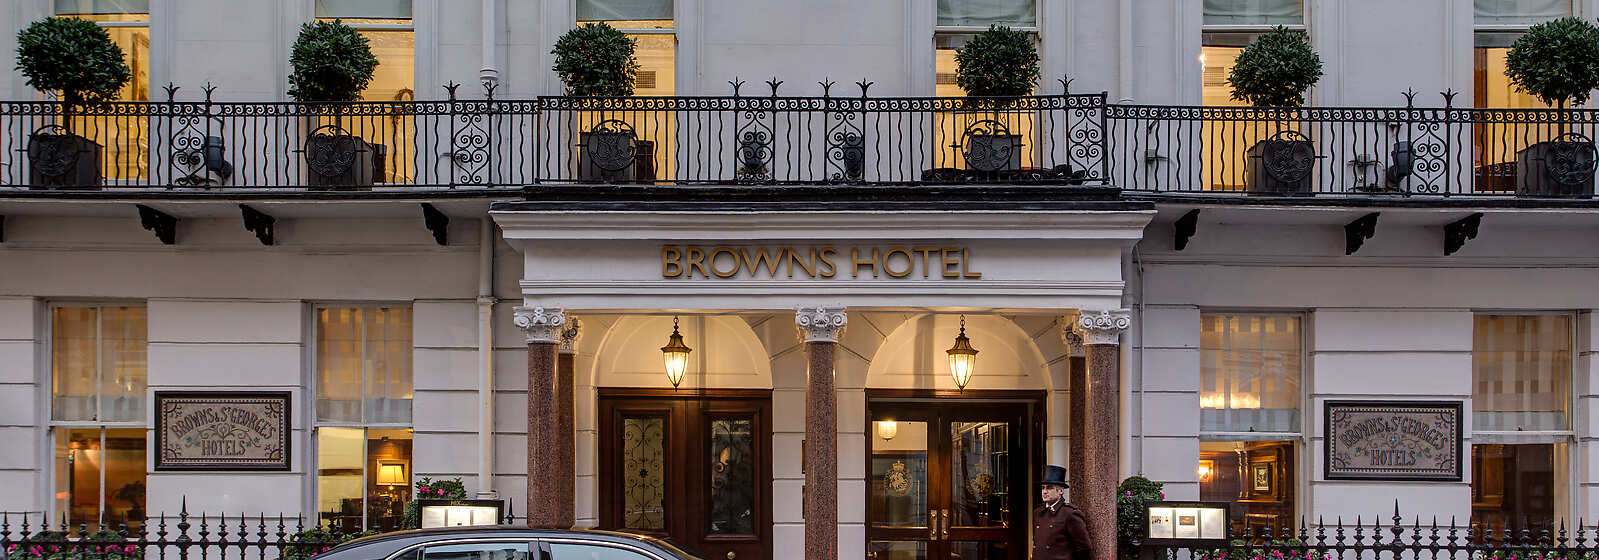 Brown's Hotel, a Rocco Forte hotel